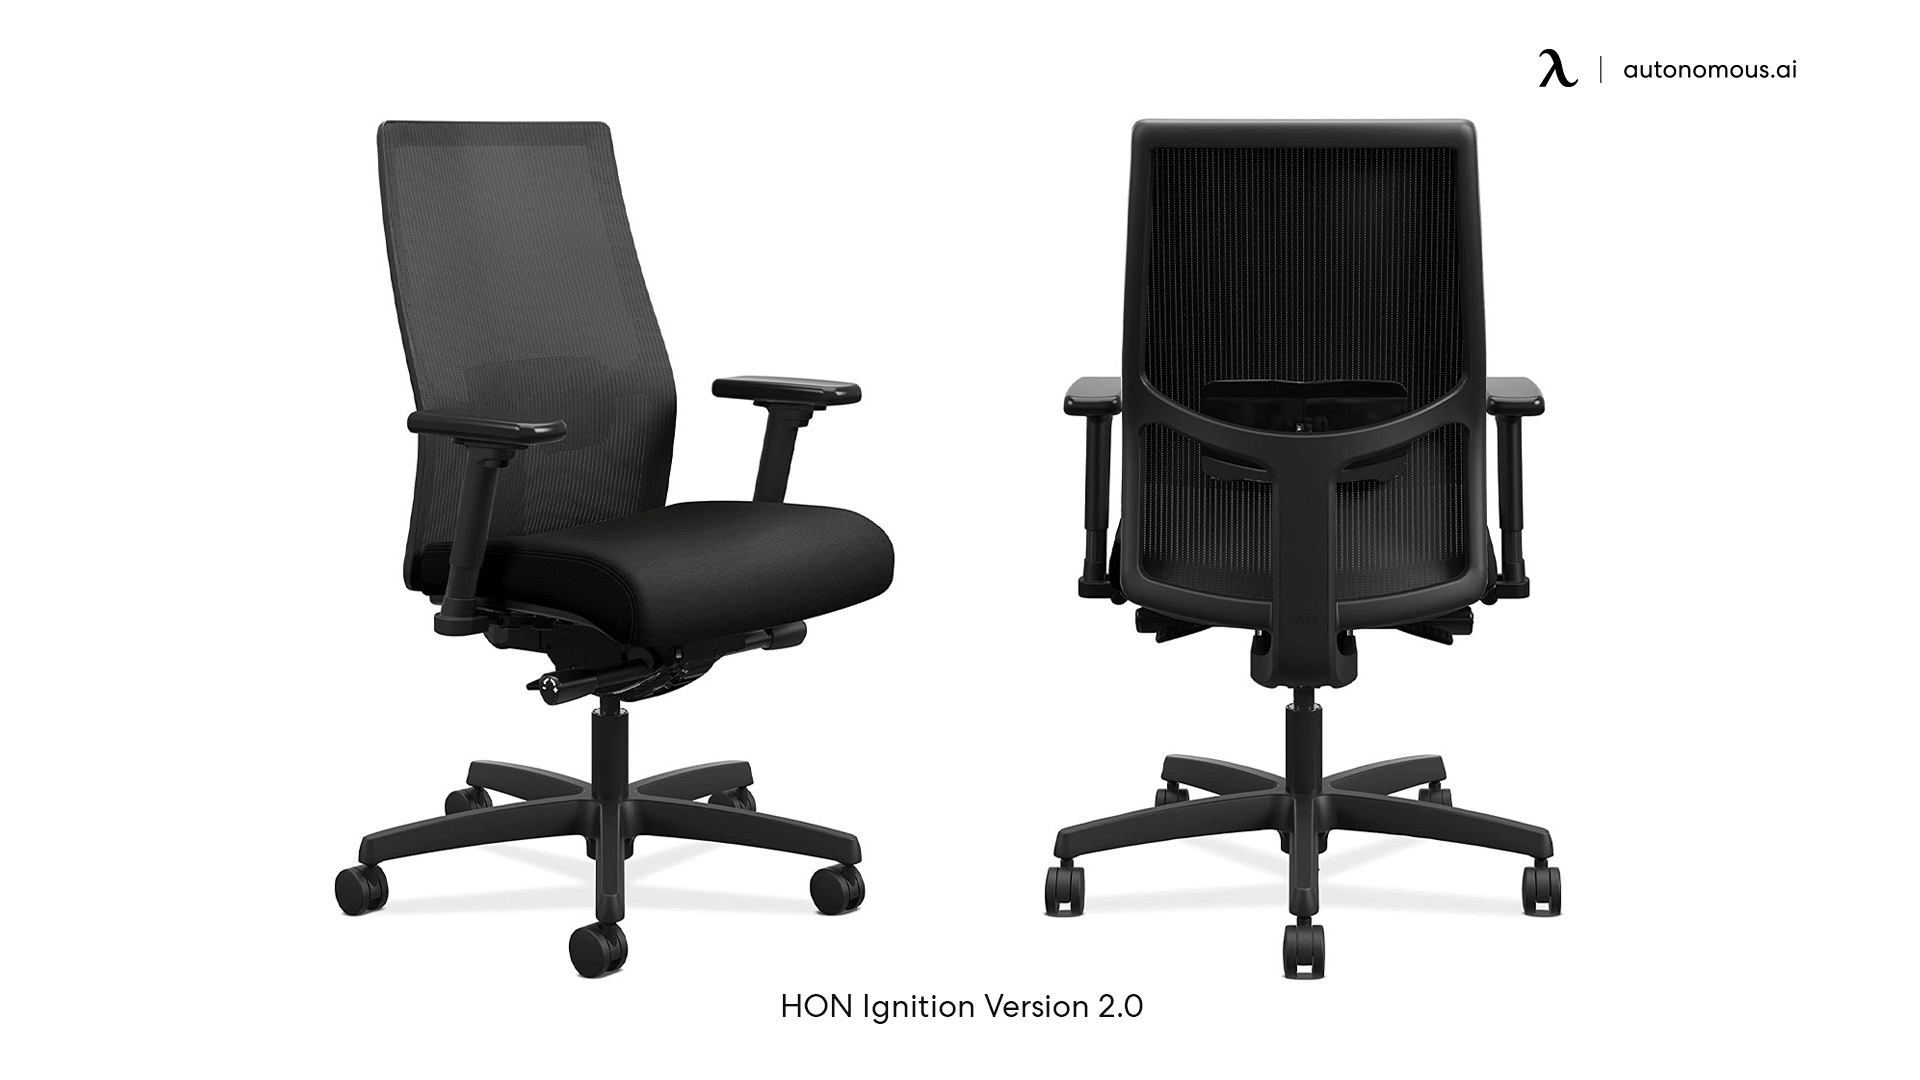 HON's Ignition 2.0 ergonomic swivel chair